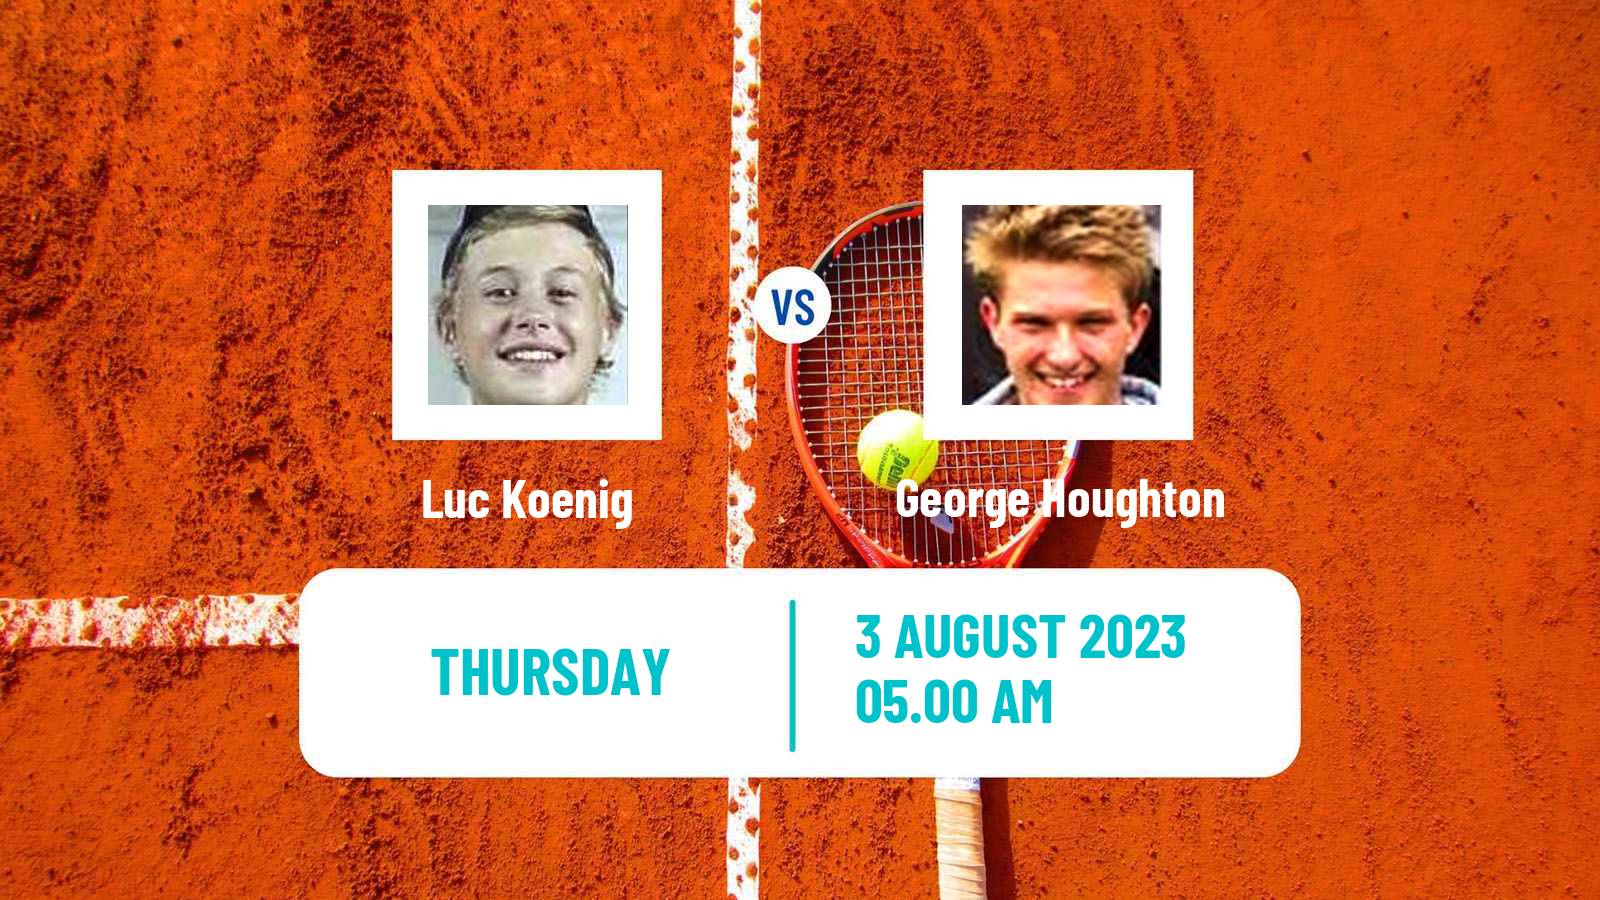 Tennis ITF M25 Roehampton 2 Men Luc Koenig - George Houghton